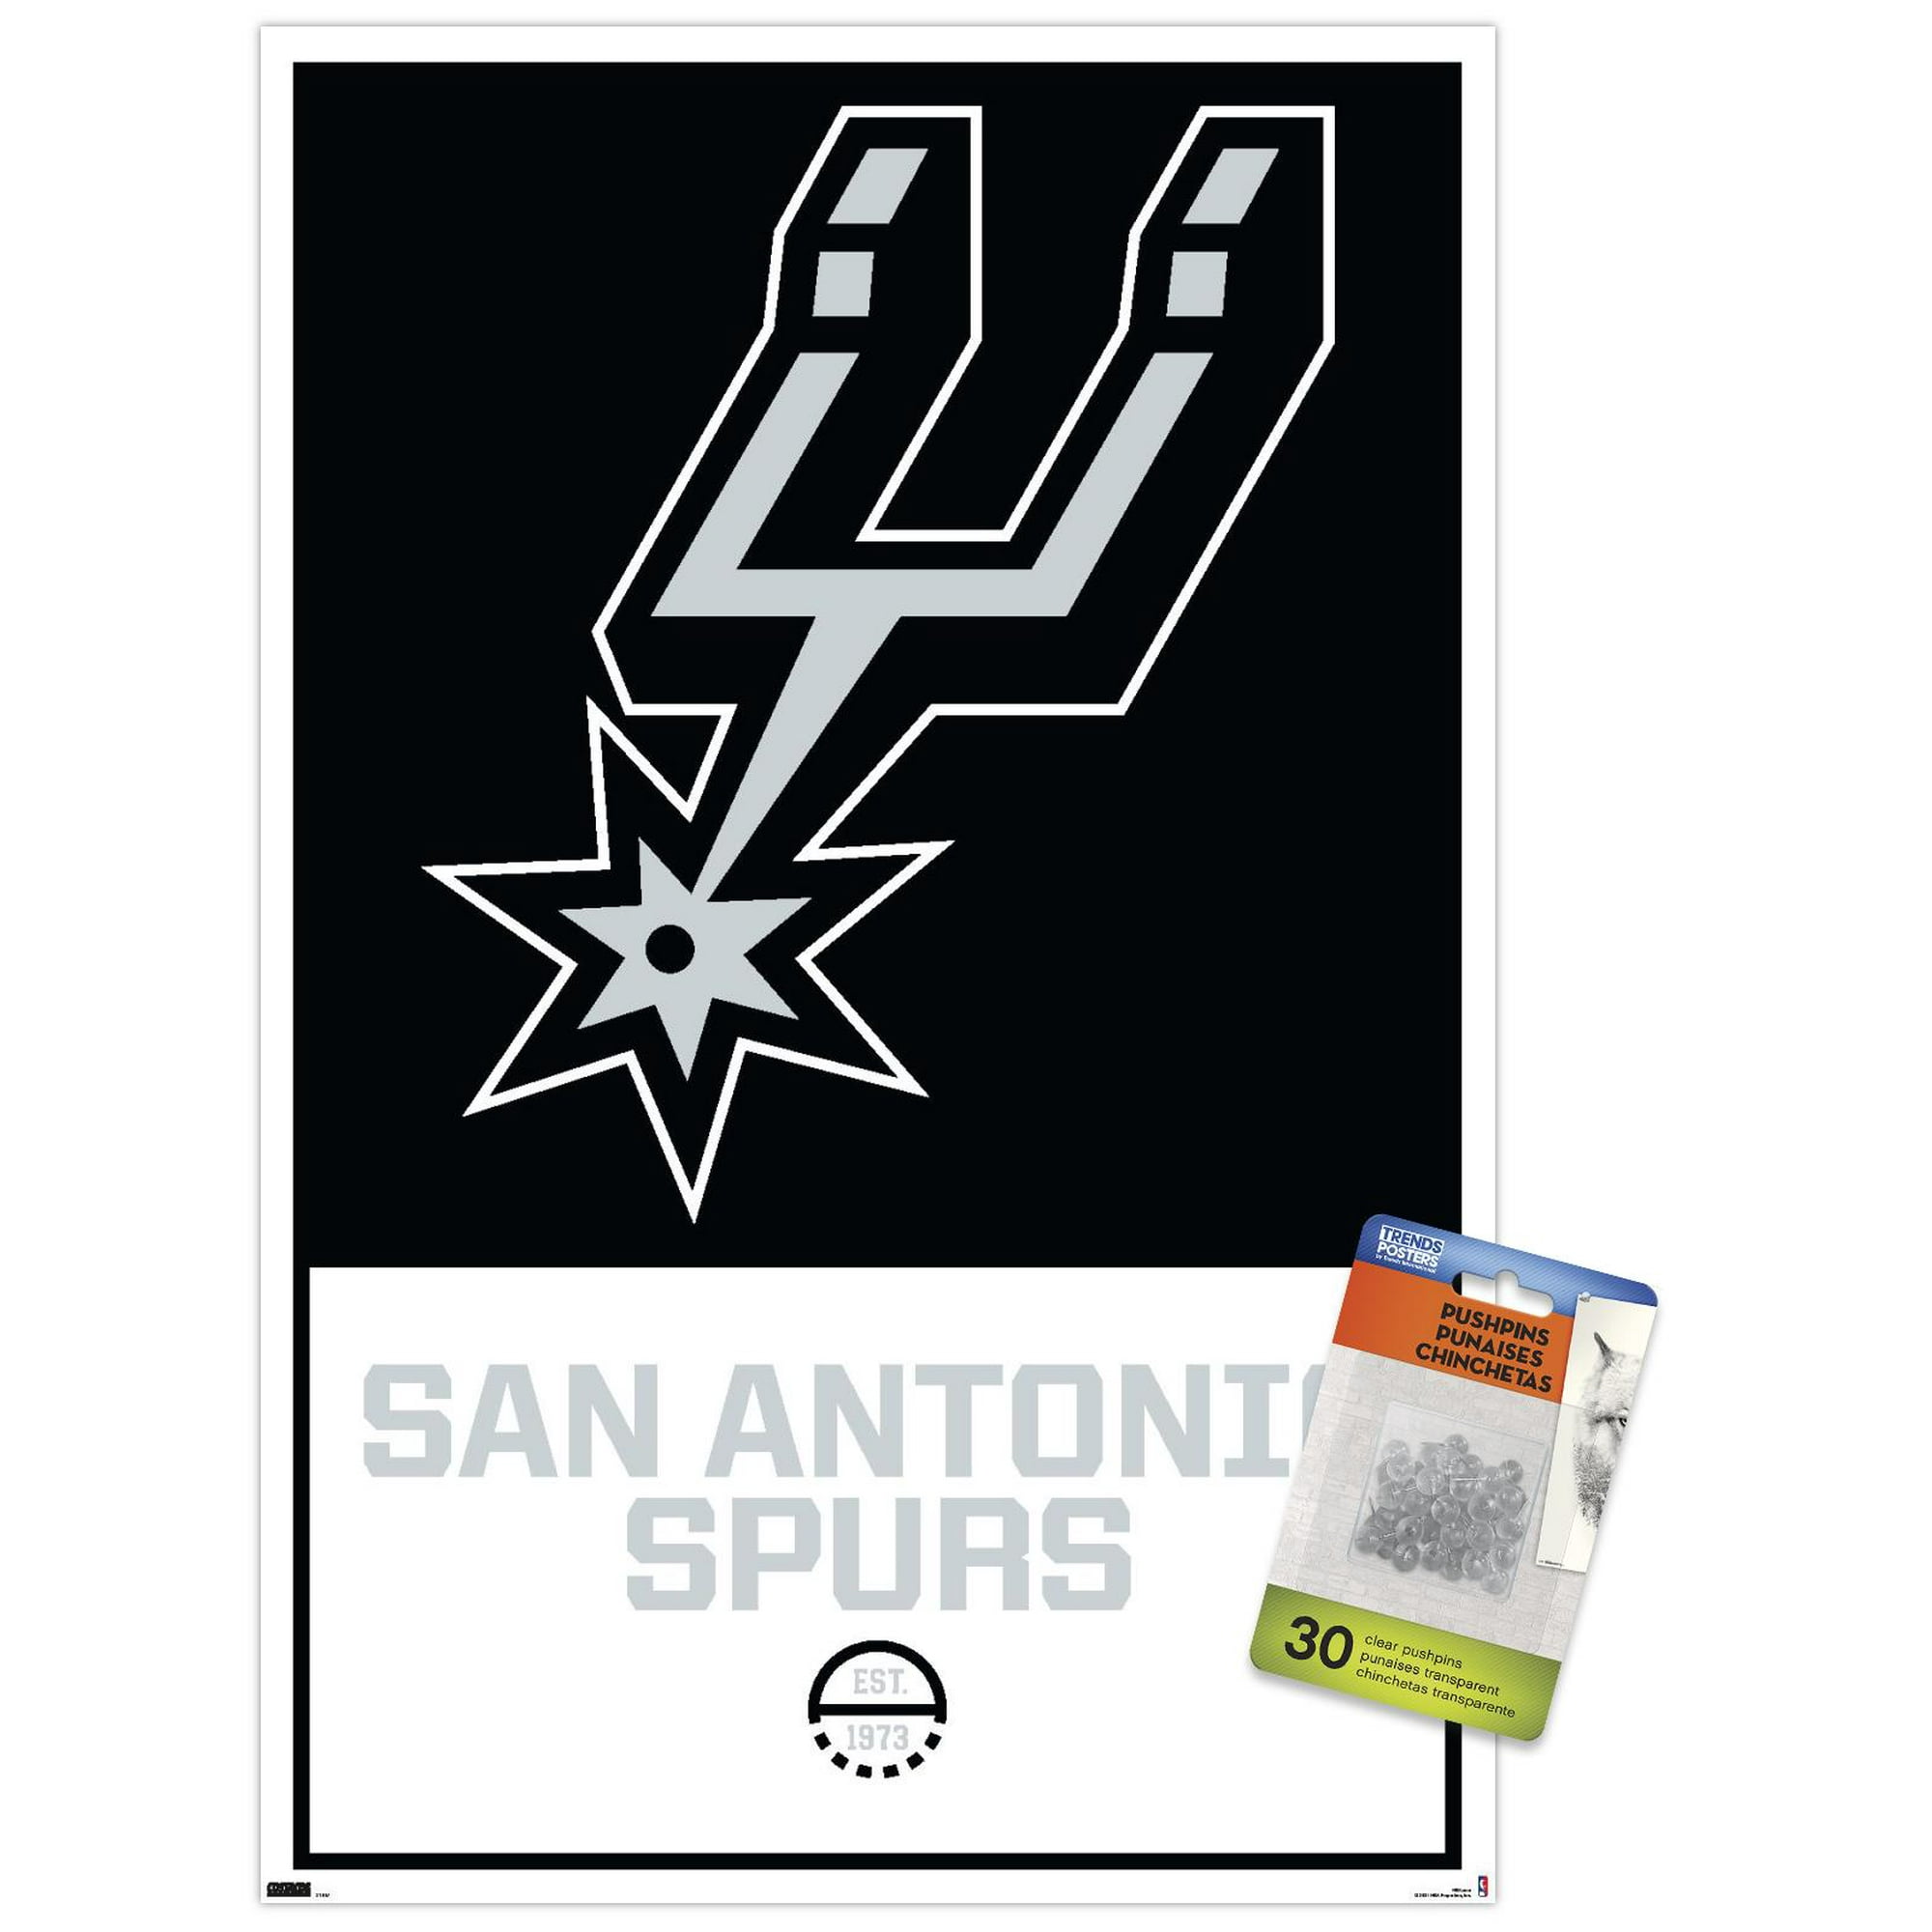 San Antonio Spurs on X:  / X